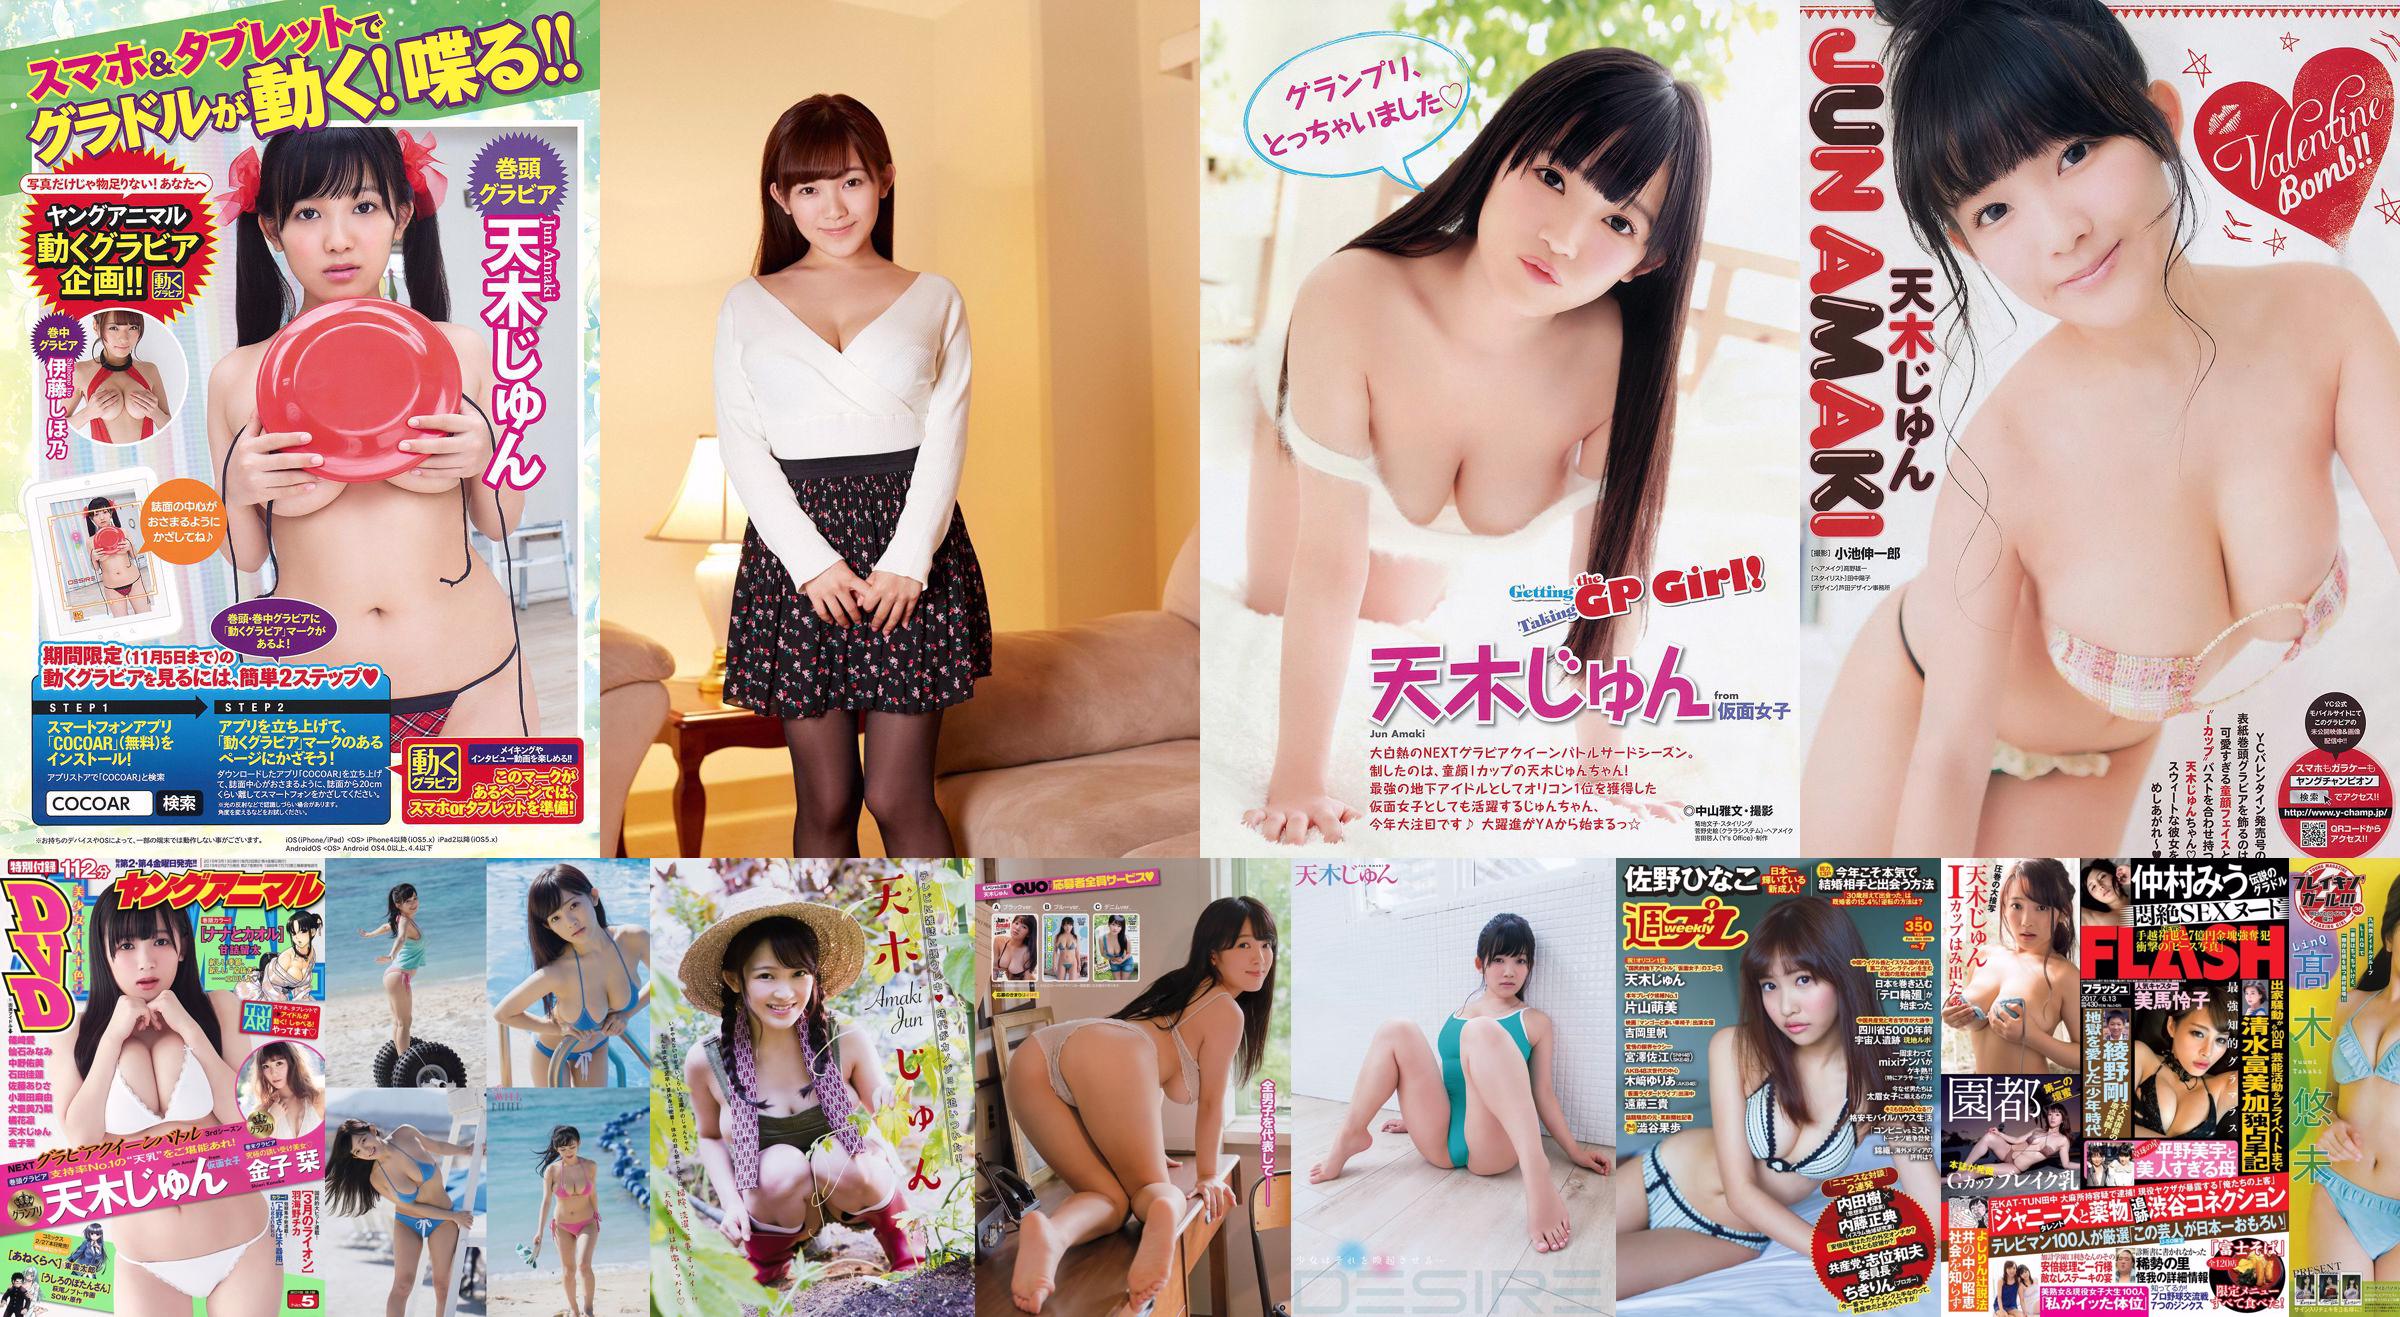 Kara Ryu il 《Shinjuku Journey Photographs》 [Beauty My Girl] VOL.254 No.77e4da Page 47